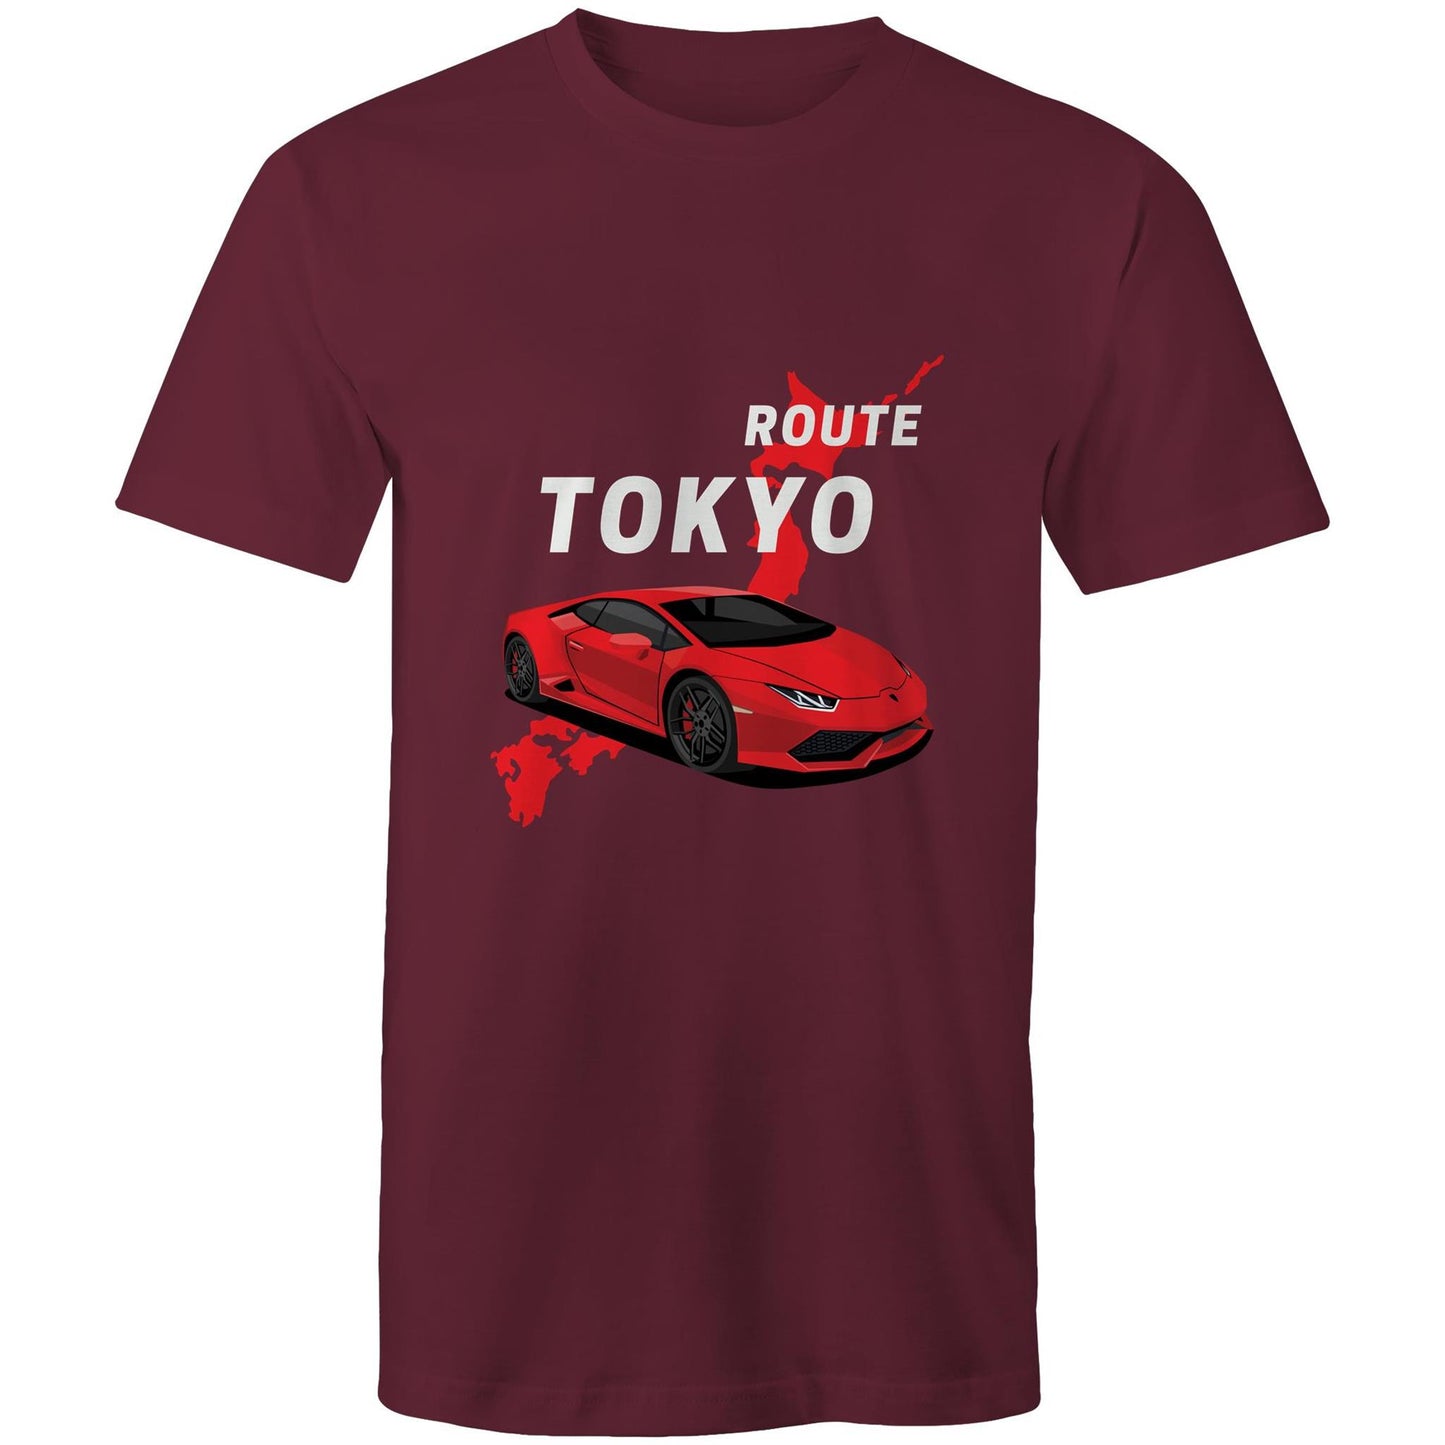 Route Tokyo - Mens T-Shirt